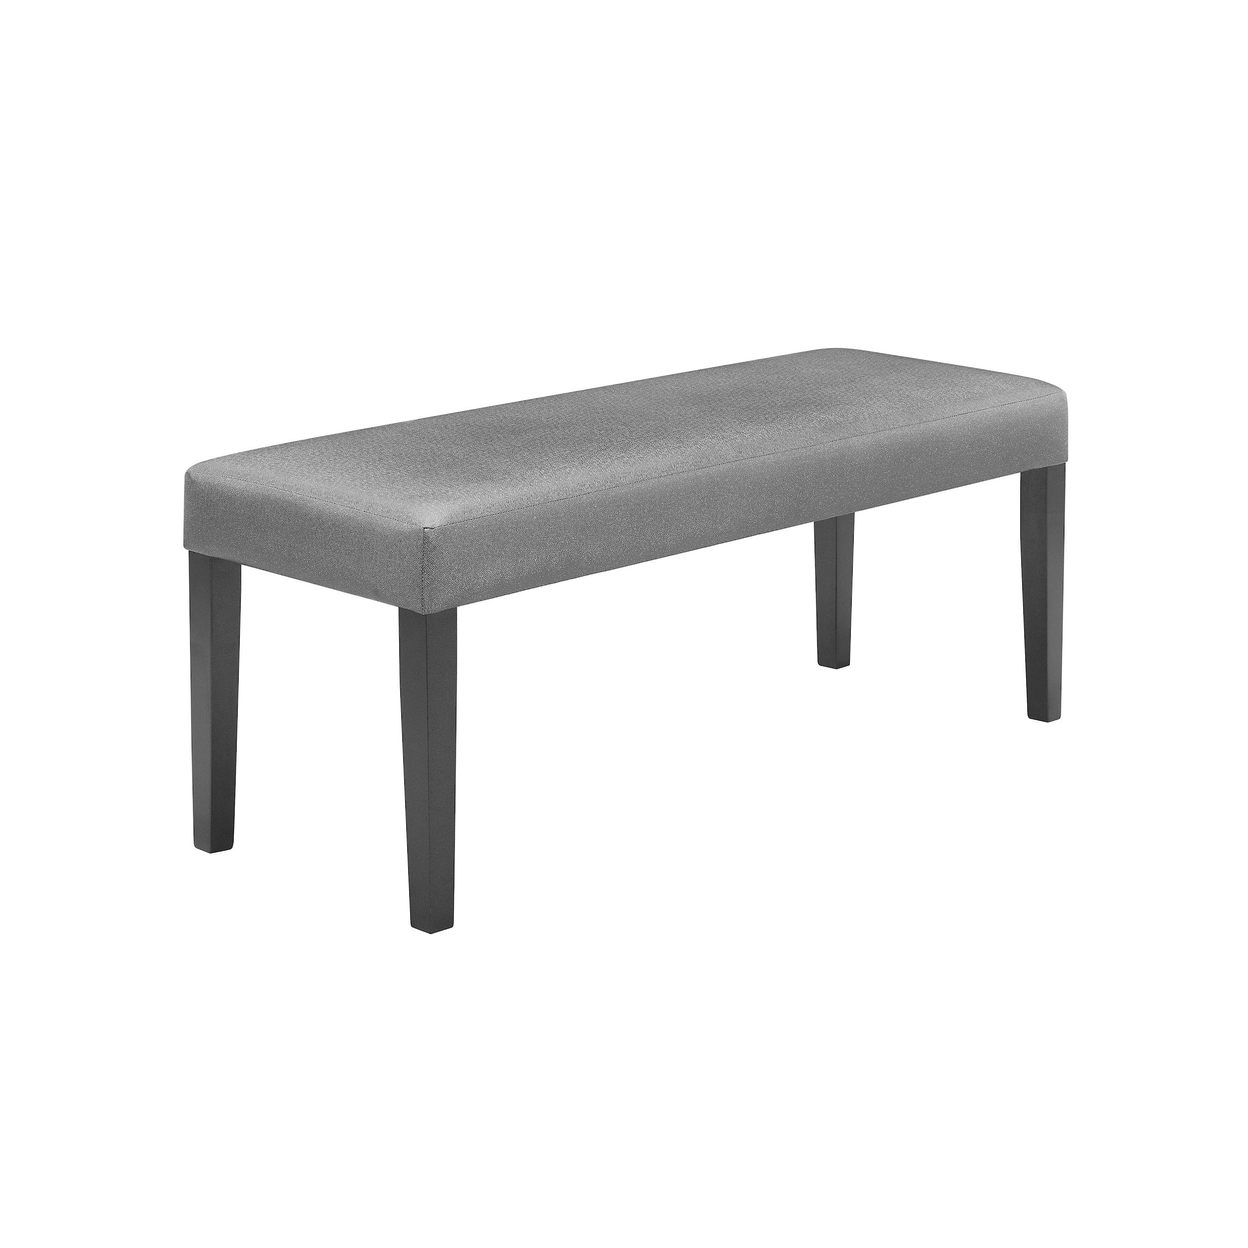 Brandon 46 Inch Bench, Black Wood Frame, Gray Fabric Upholstery -Saltoro Sherpi